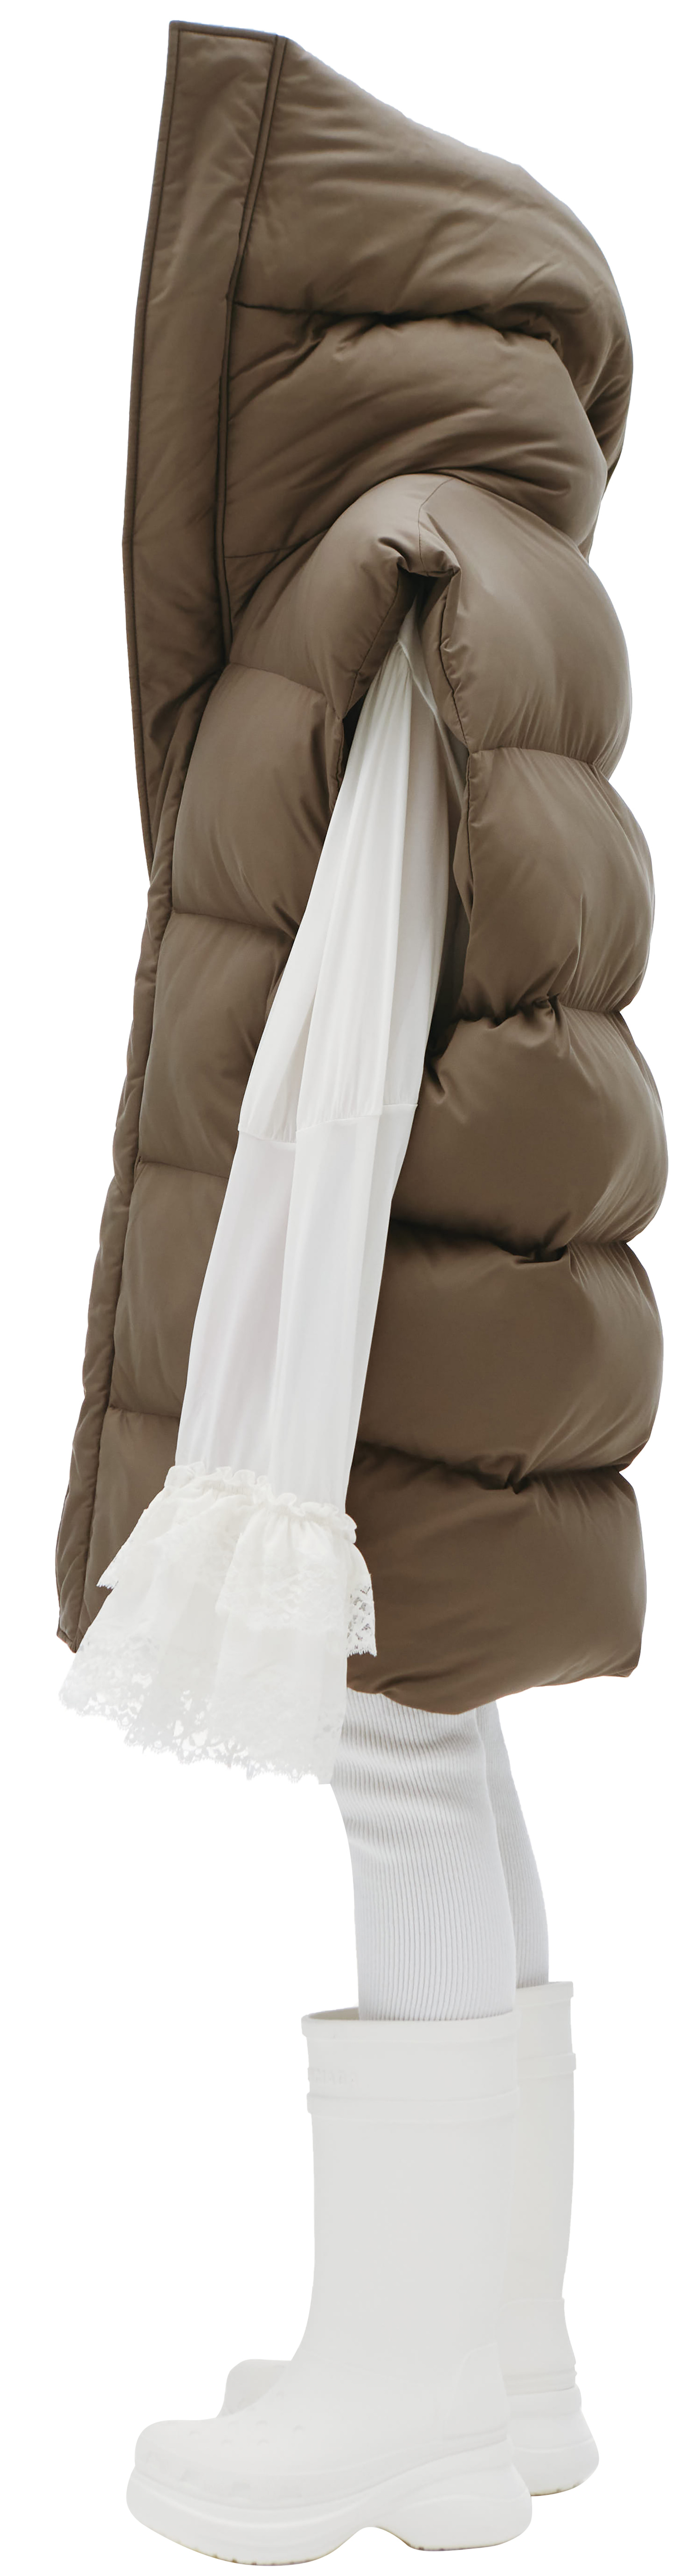 Balenciaga Oversized Puffer Vest